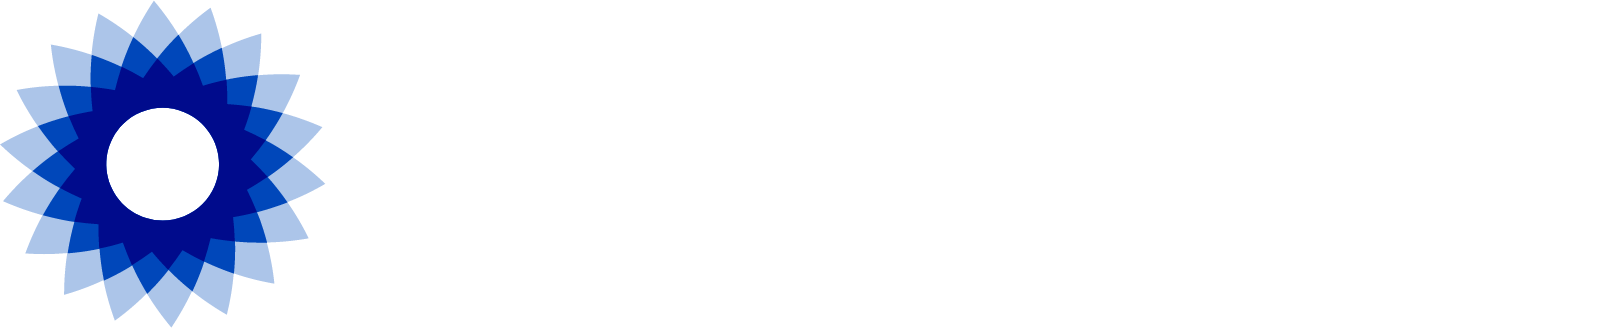 BrightSphere Investment Group Logo groß für dunkle Hintergründe (transparentes PNG)